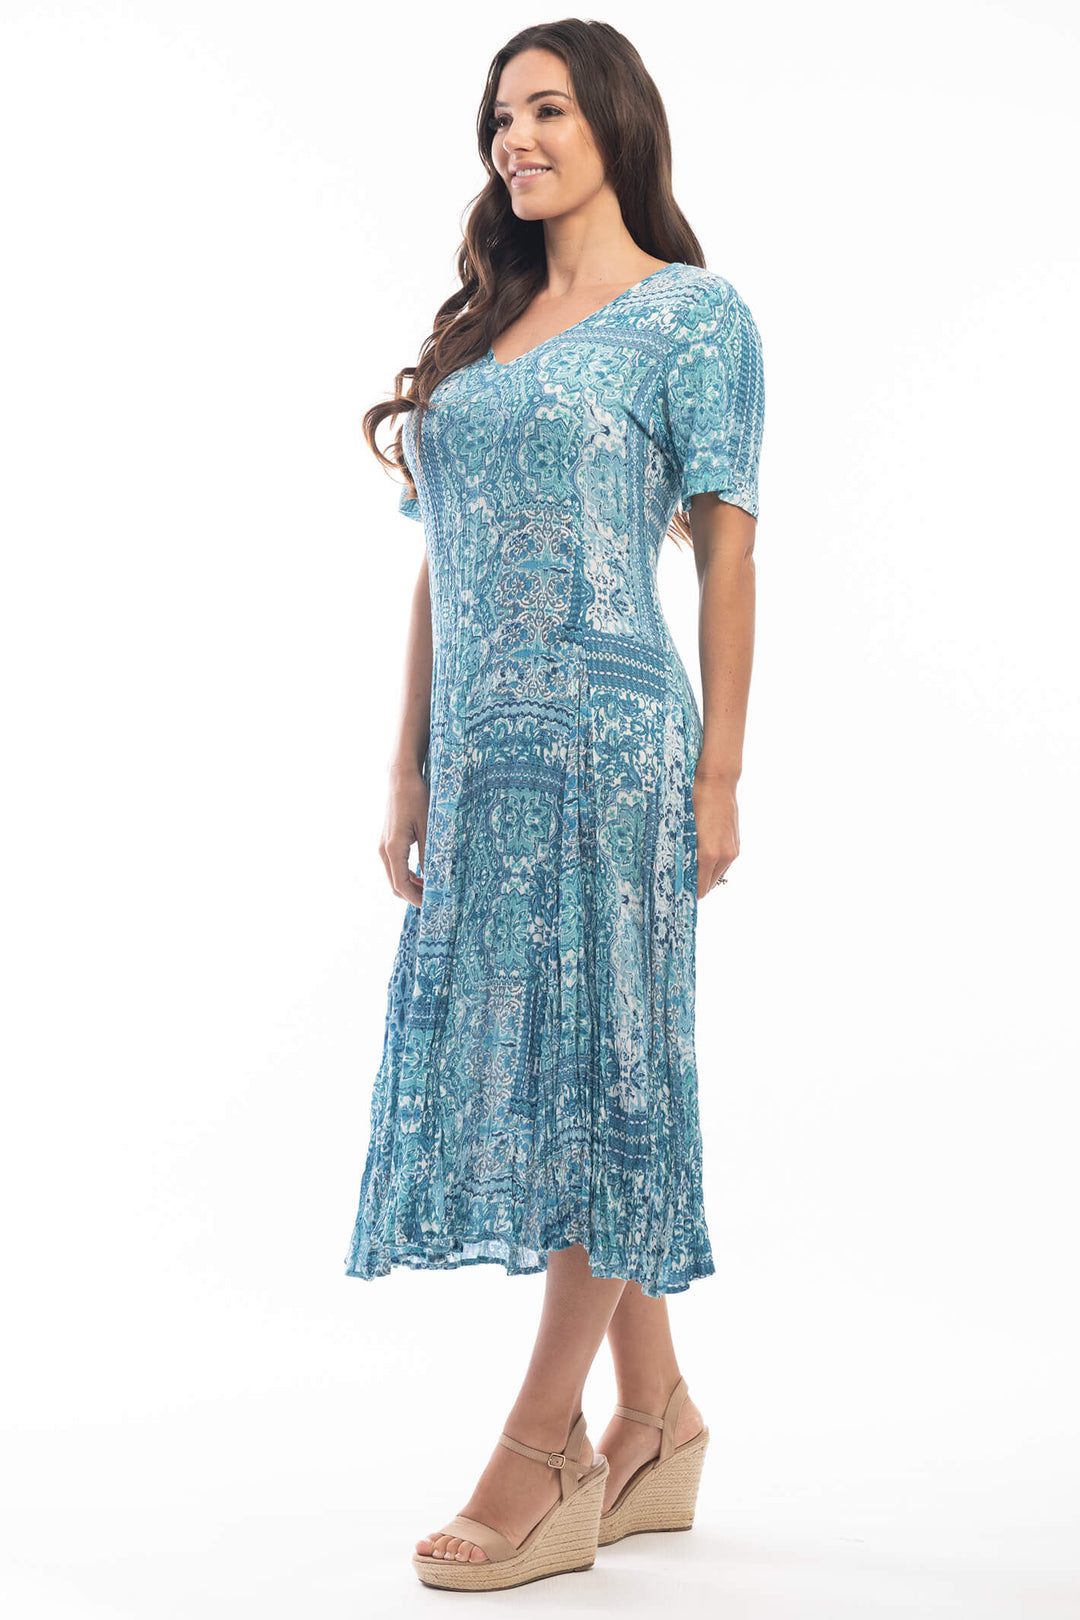 Orientique 4134 Kotor Blue Godet Sleeve Dress - Shirley Allum Boutique